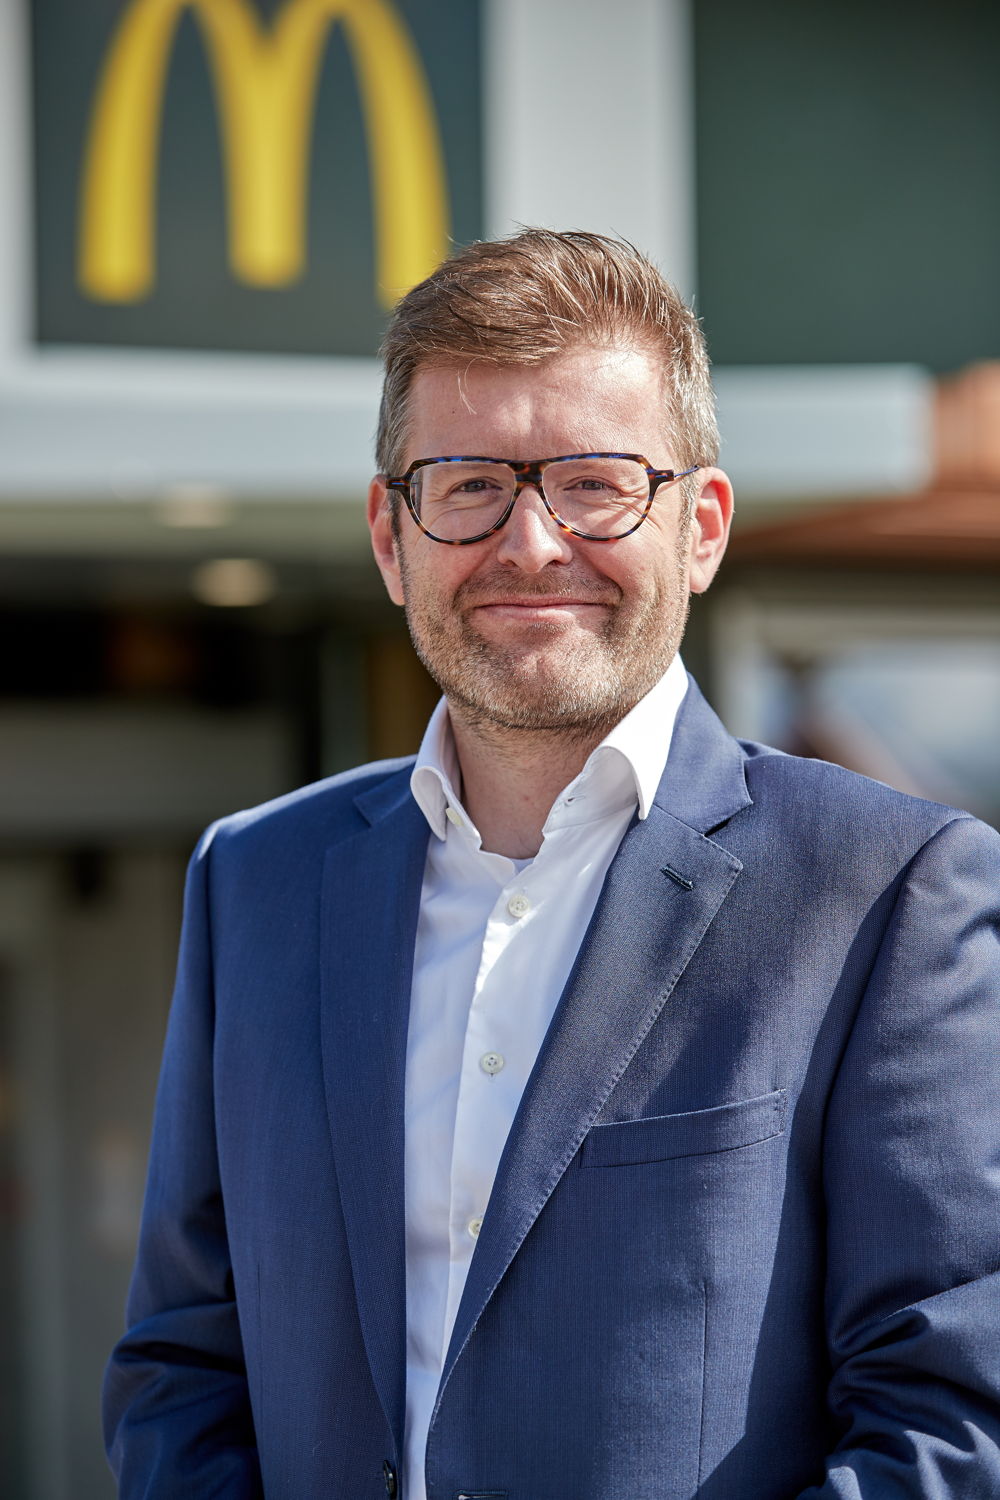 Stijn Heytens, Managing Director at McDonald's Belgium